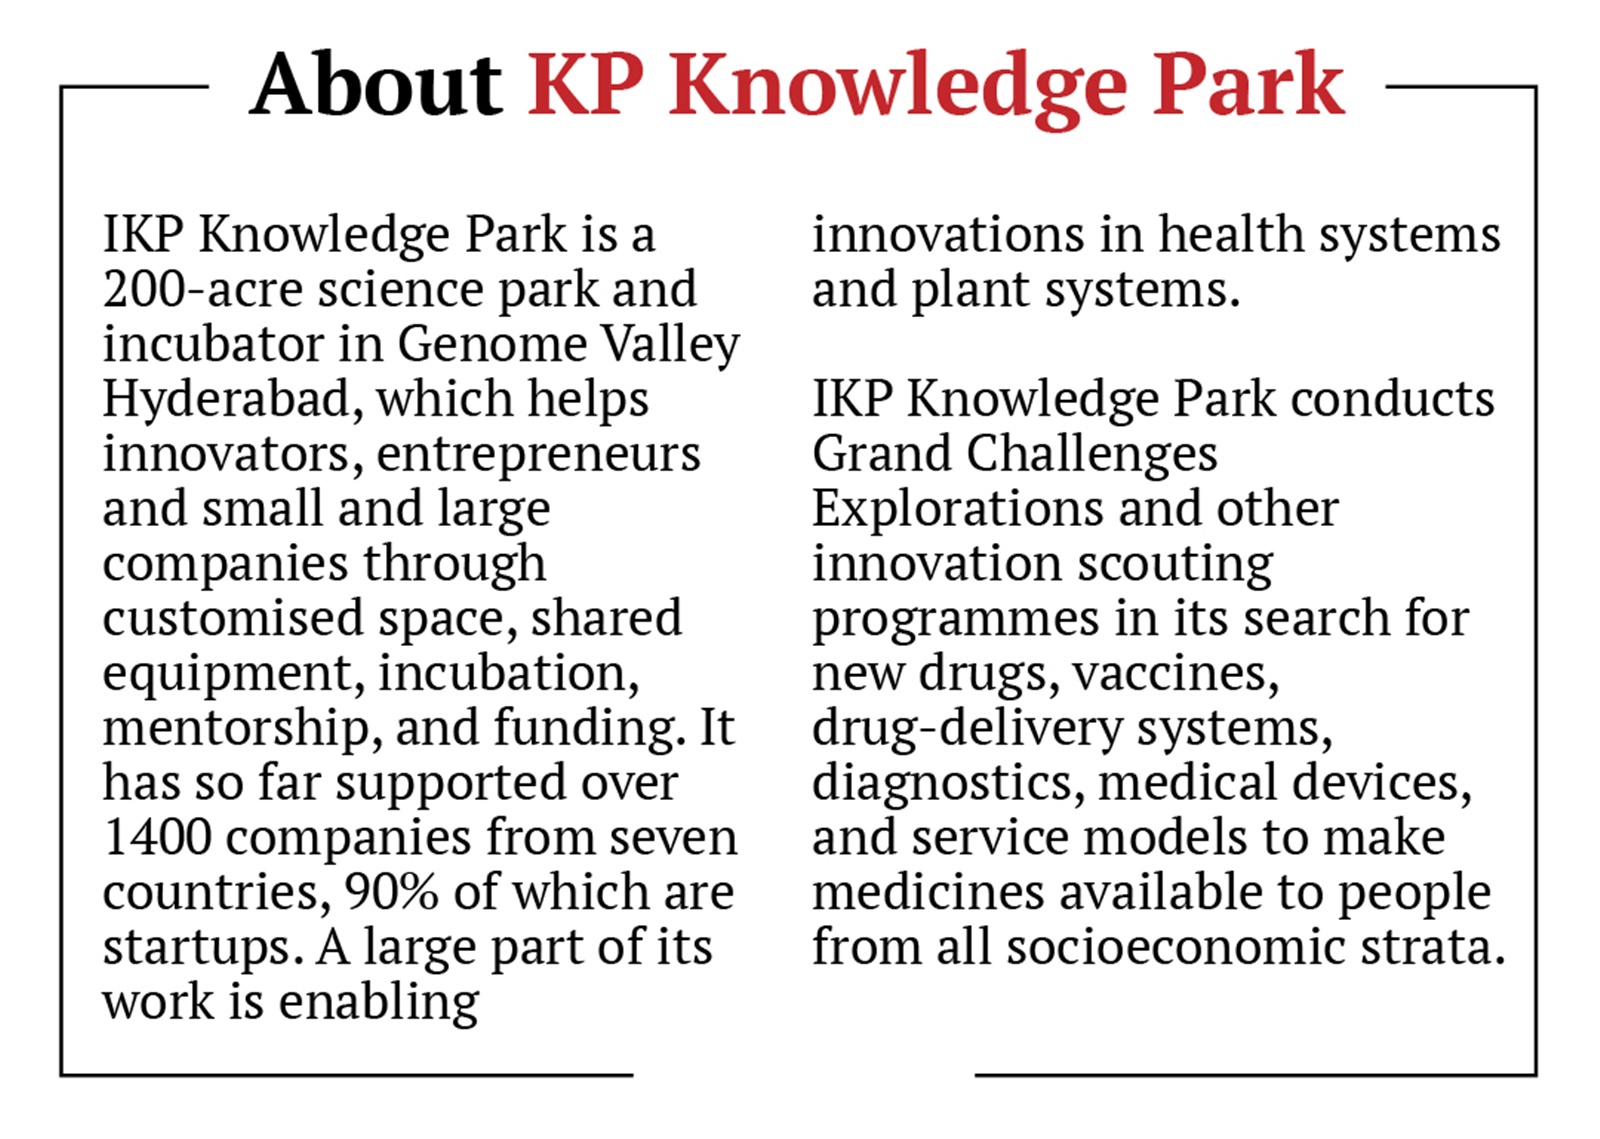 CEO, IKP Knowledge Park, Hyderabad